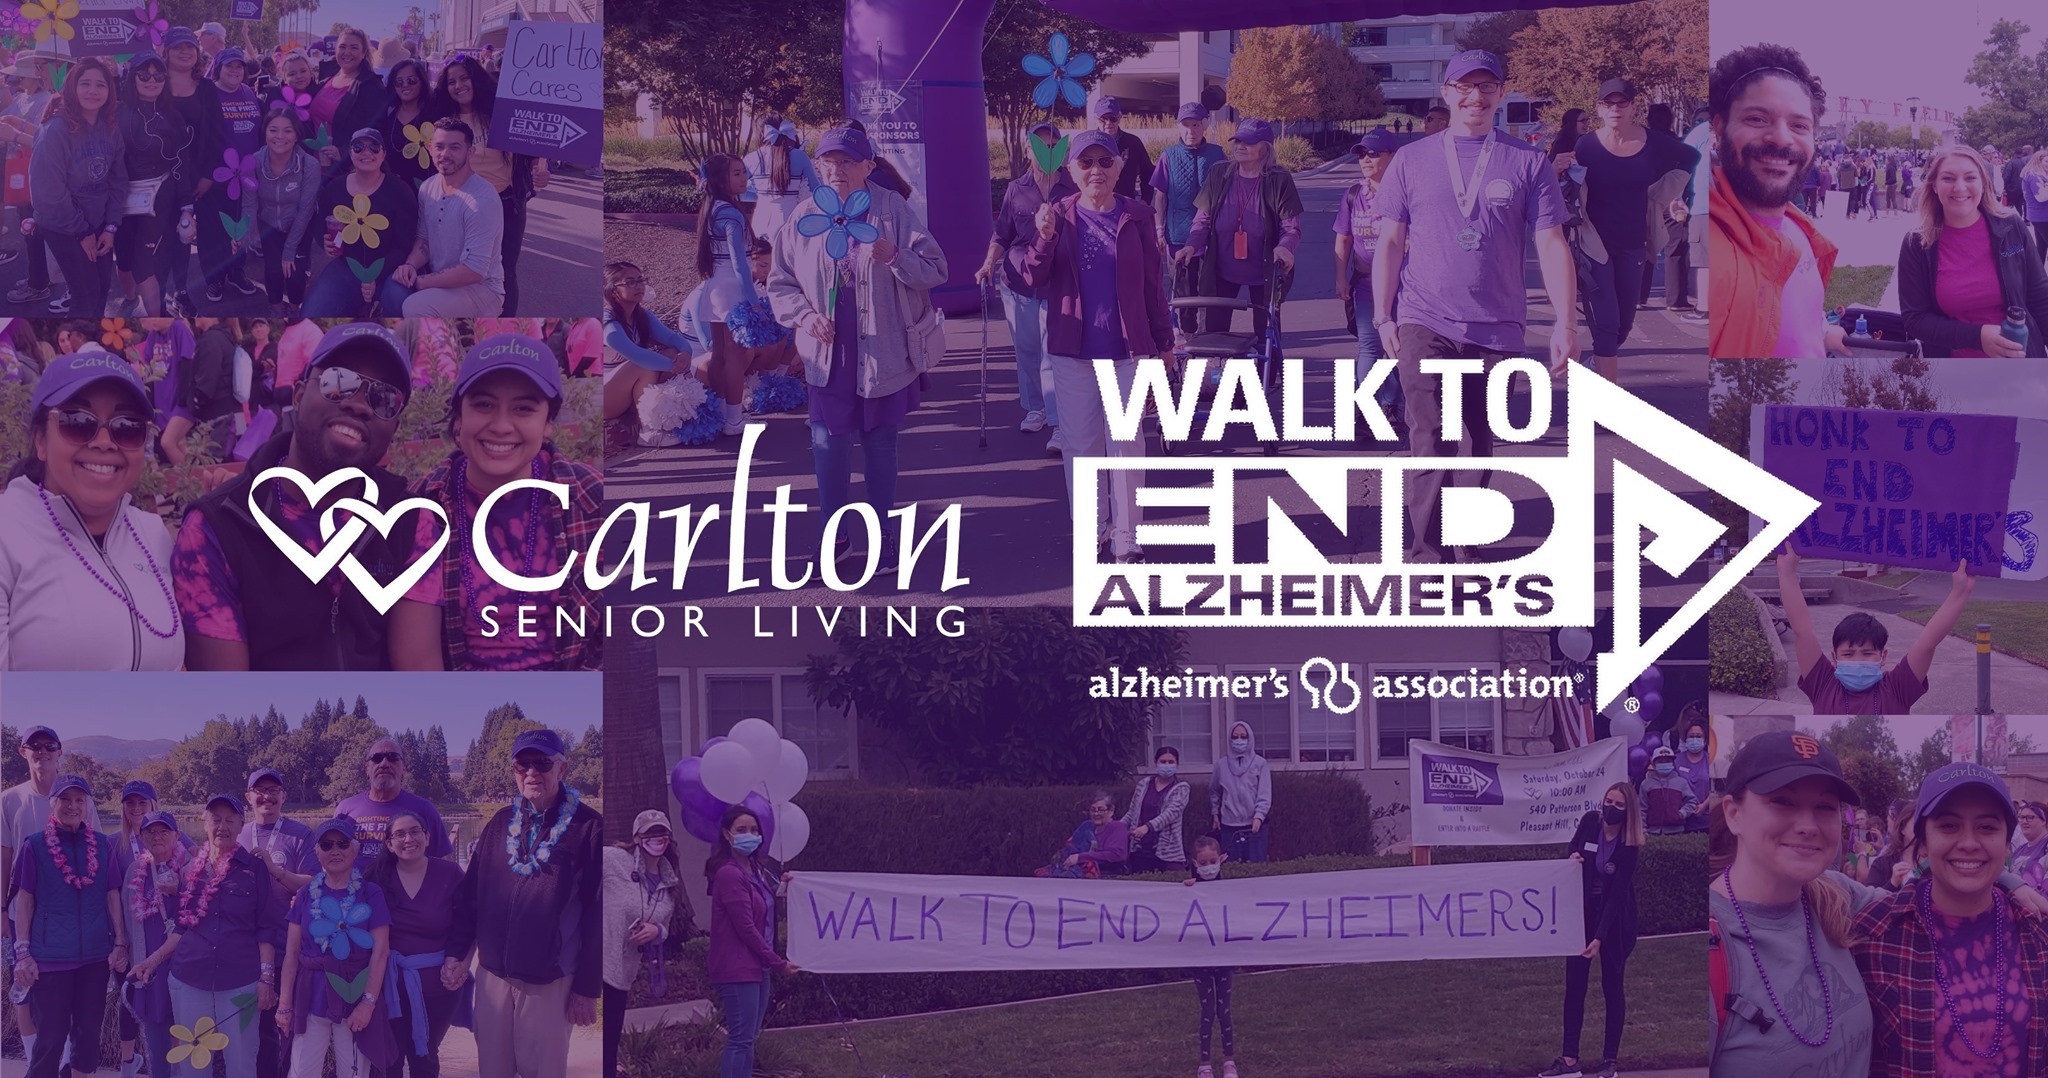 Carlton Senior Living Champions Alzheimer's Association Walks